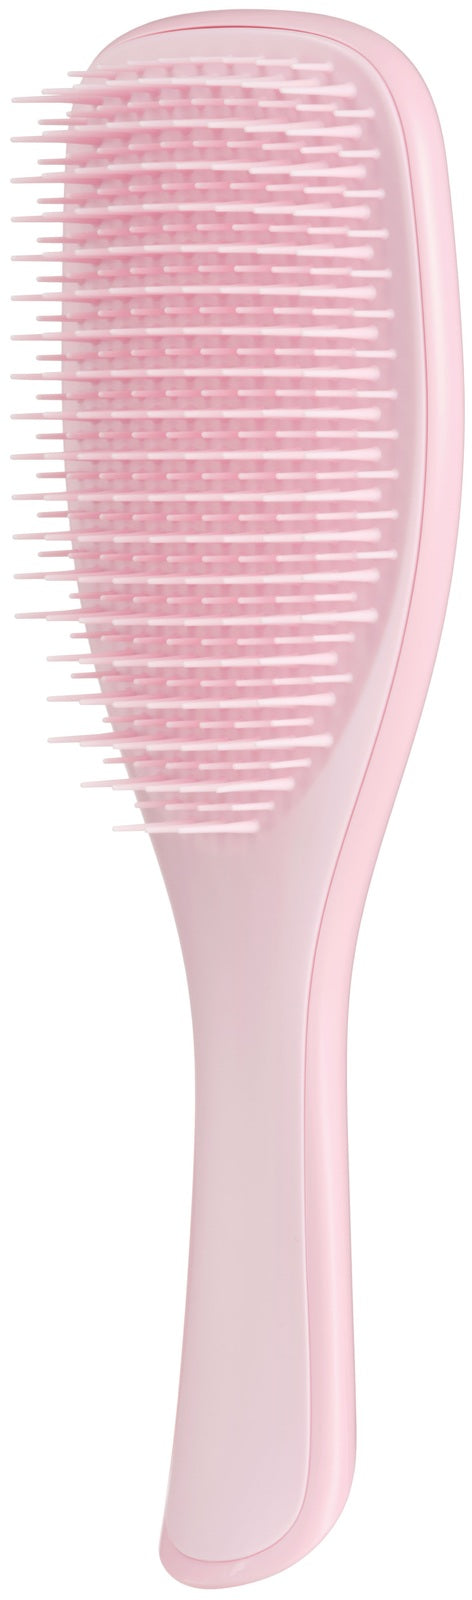 Tangle Teezer: Ultimate Detangler Brush - Pale Pink